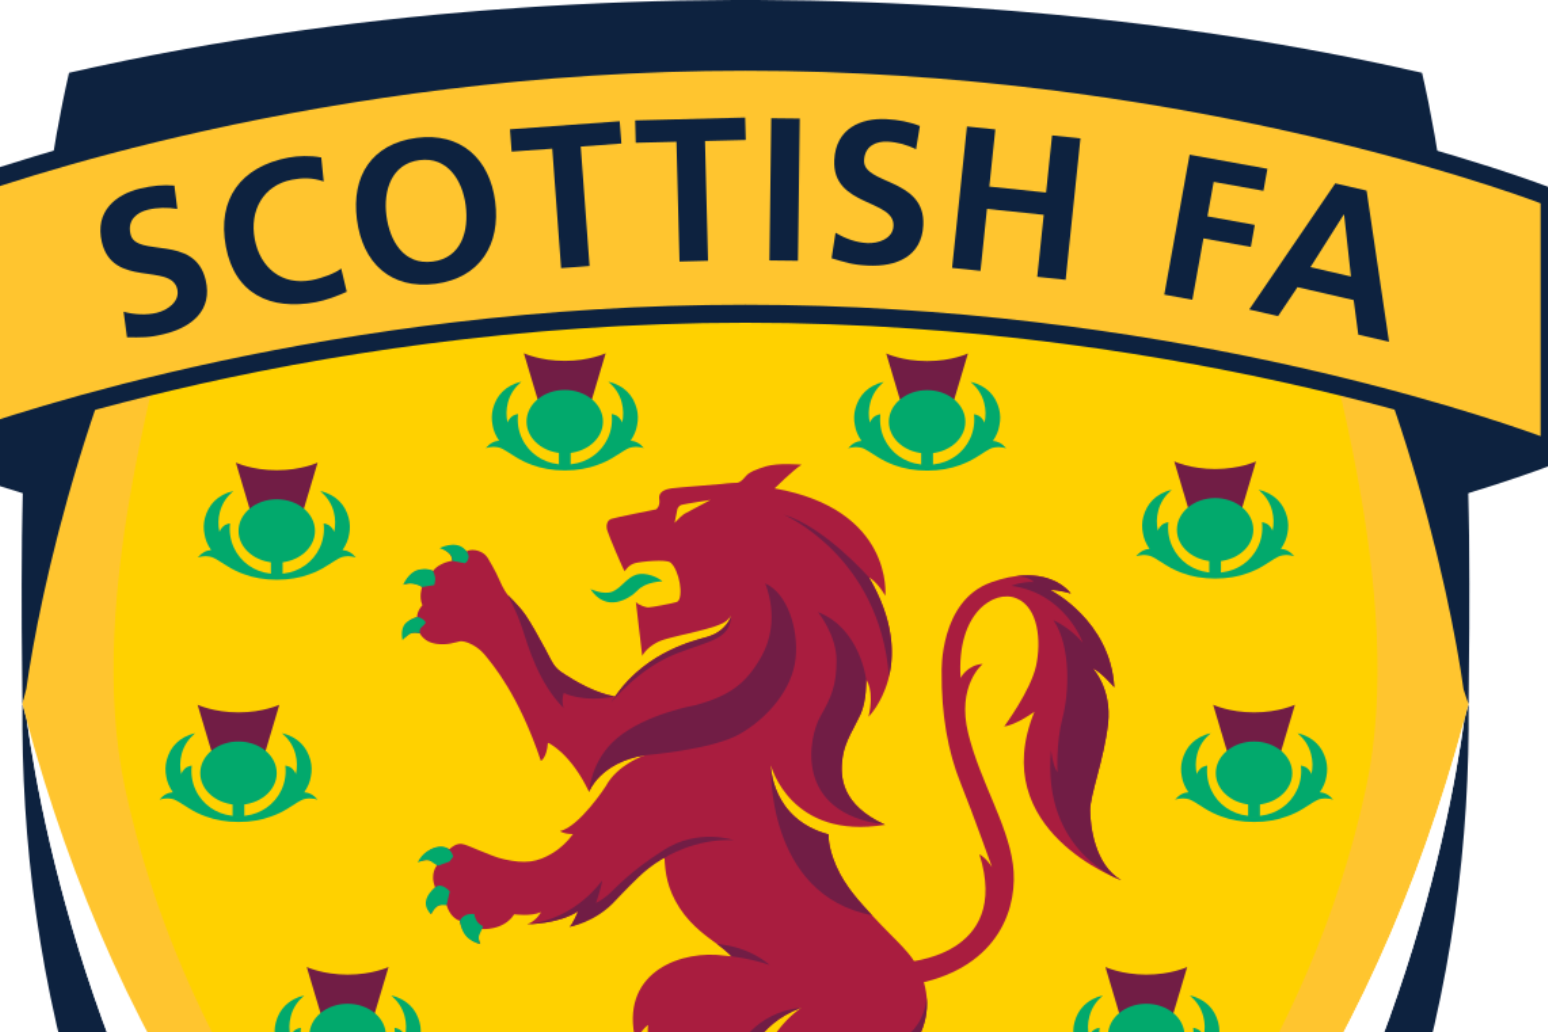 Scotlands World Cup play off semi final against Ukraine postponed